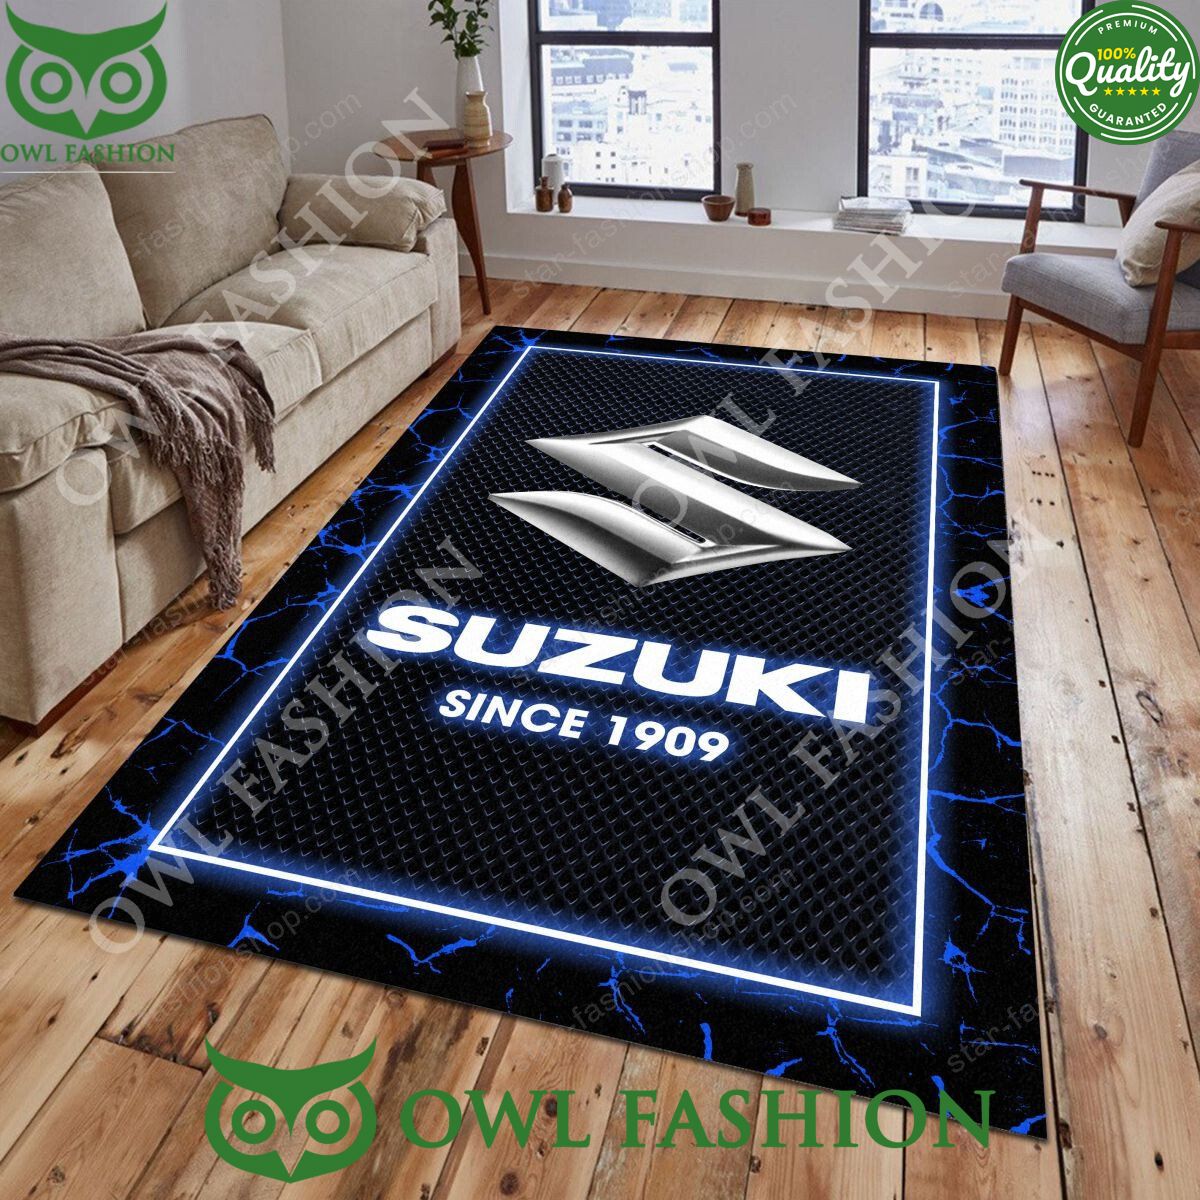 suzuki home living room lighting rug carpet 1 dRu93.jpg